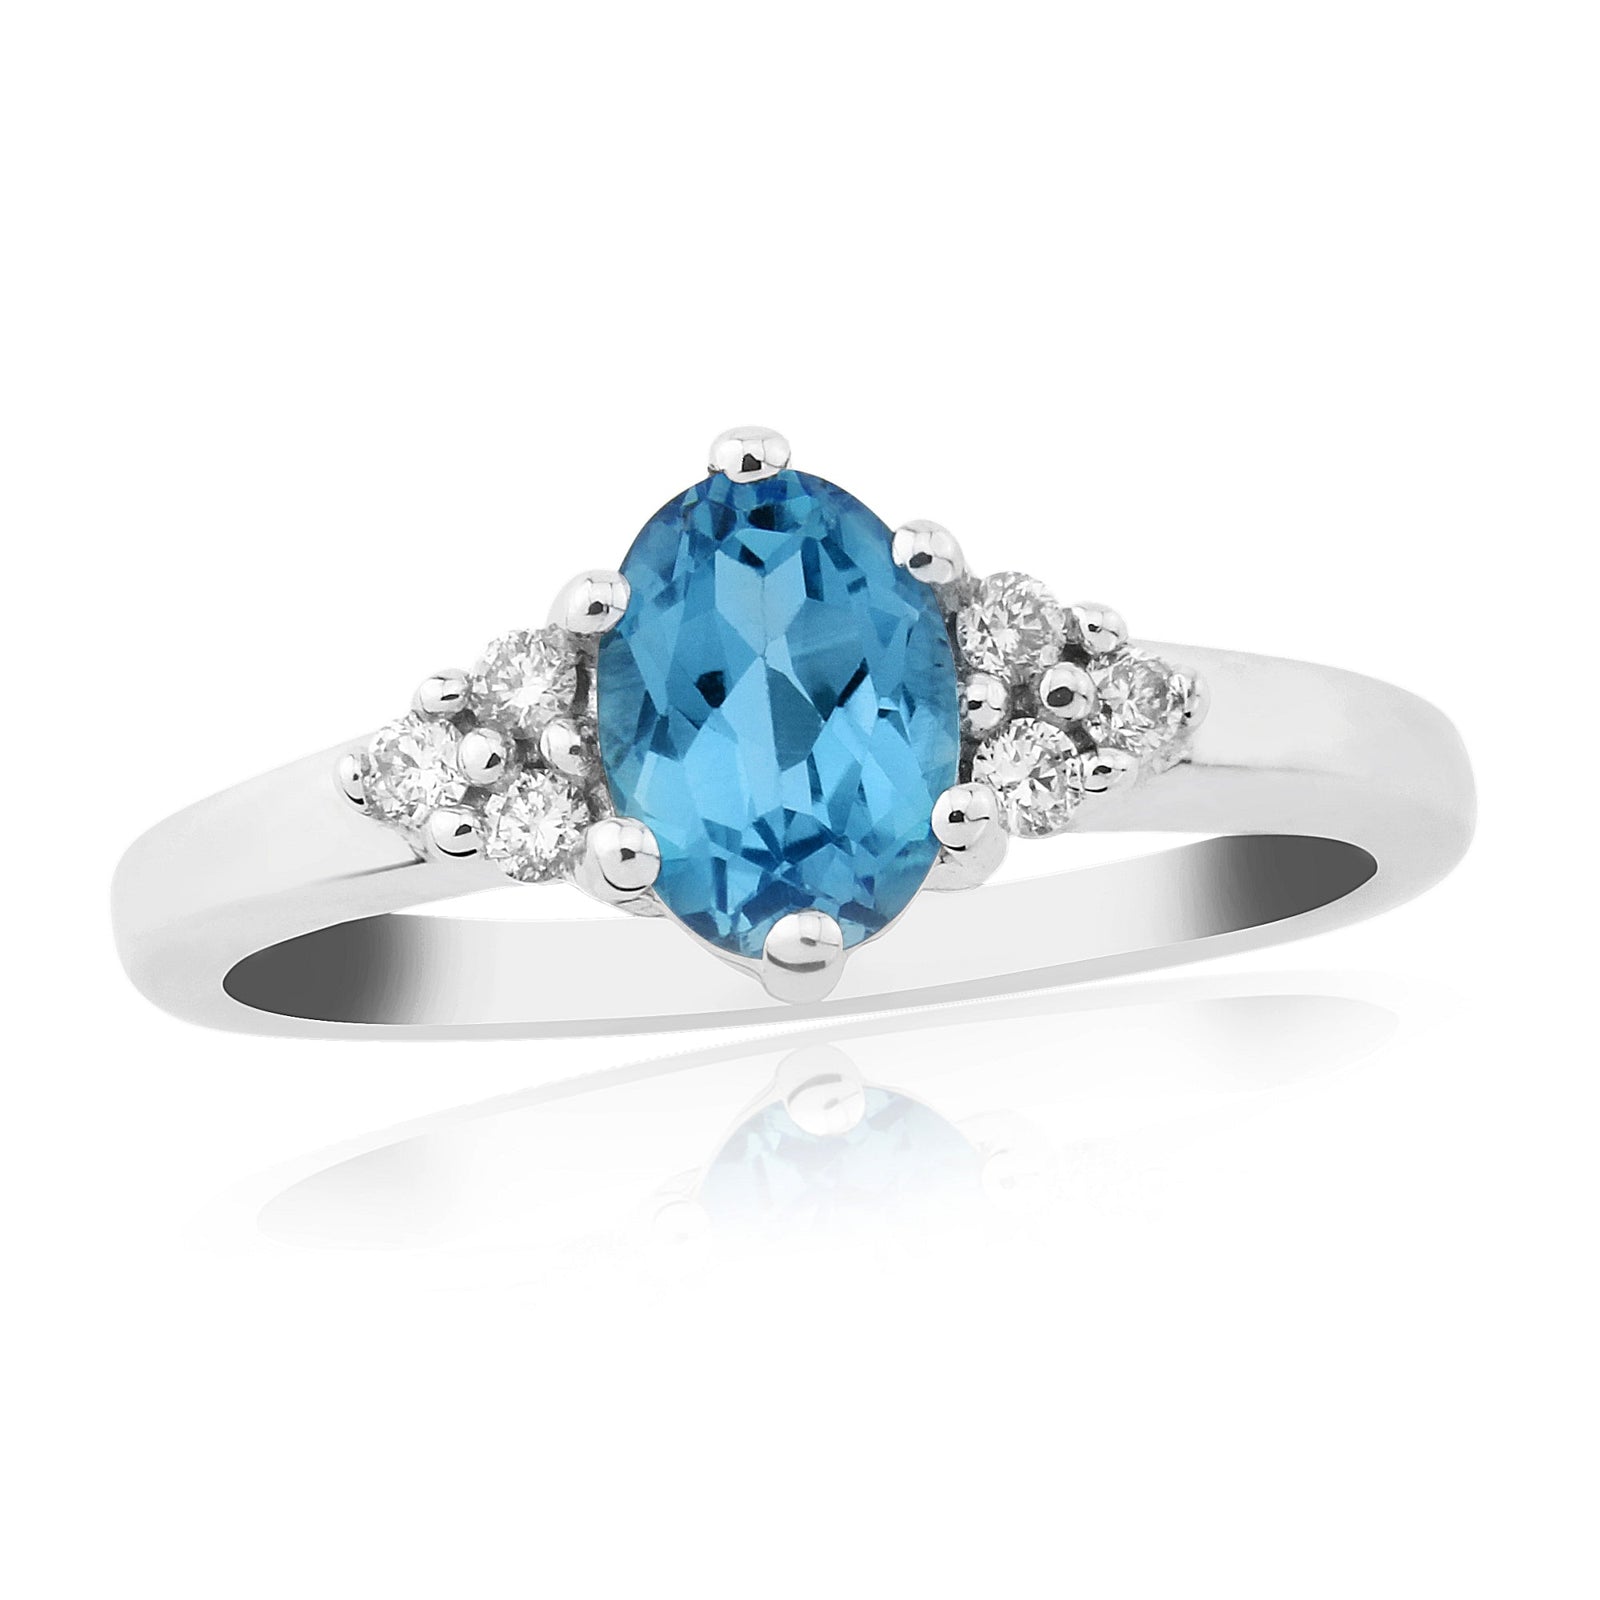 9ct white gold 7x5mm oval blue topaz & diamond ring 0.11ct